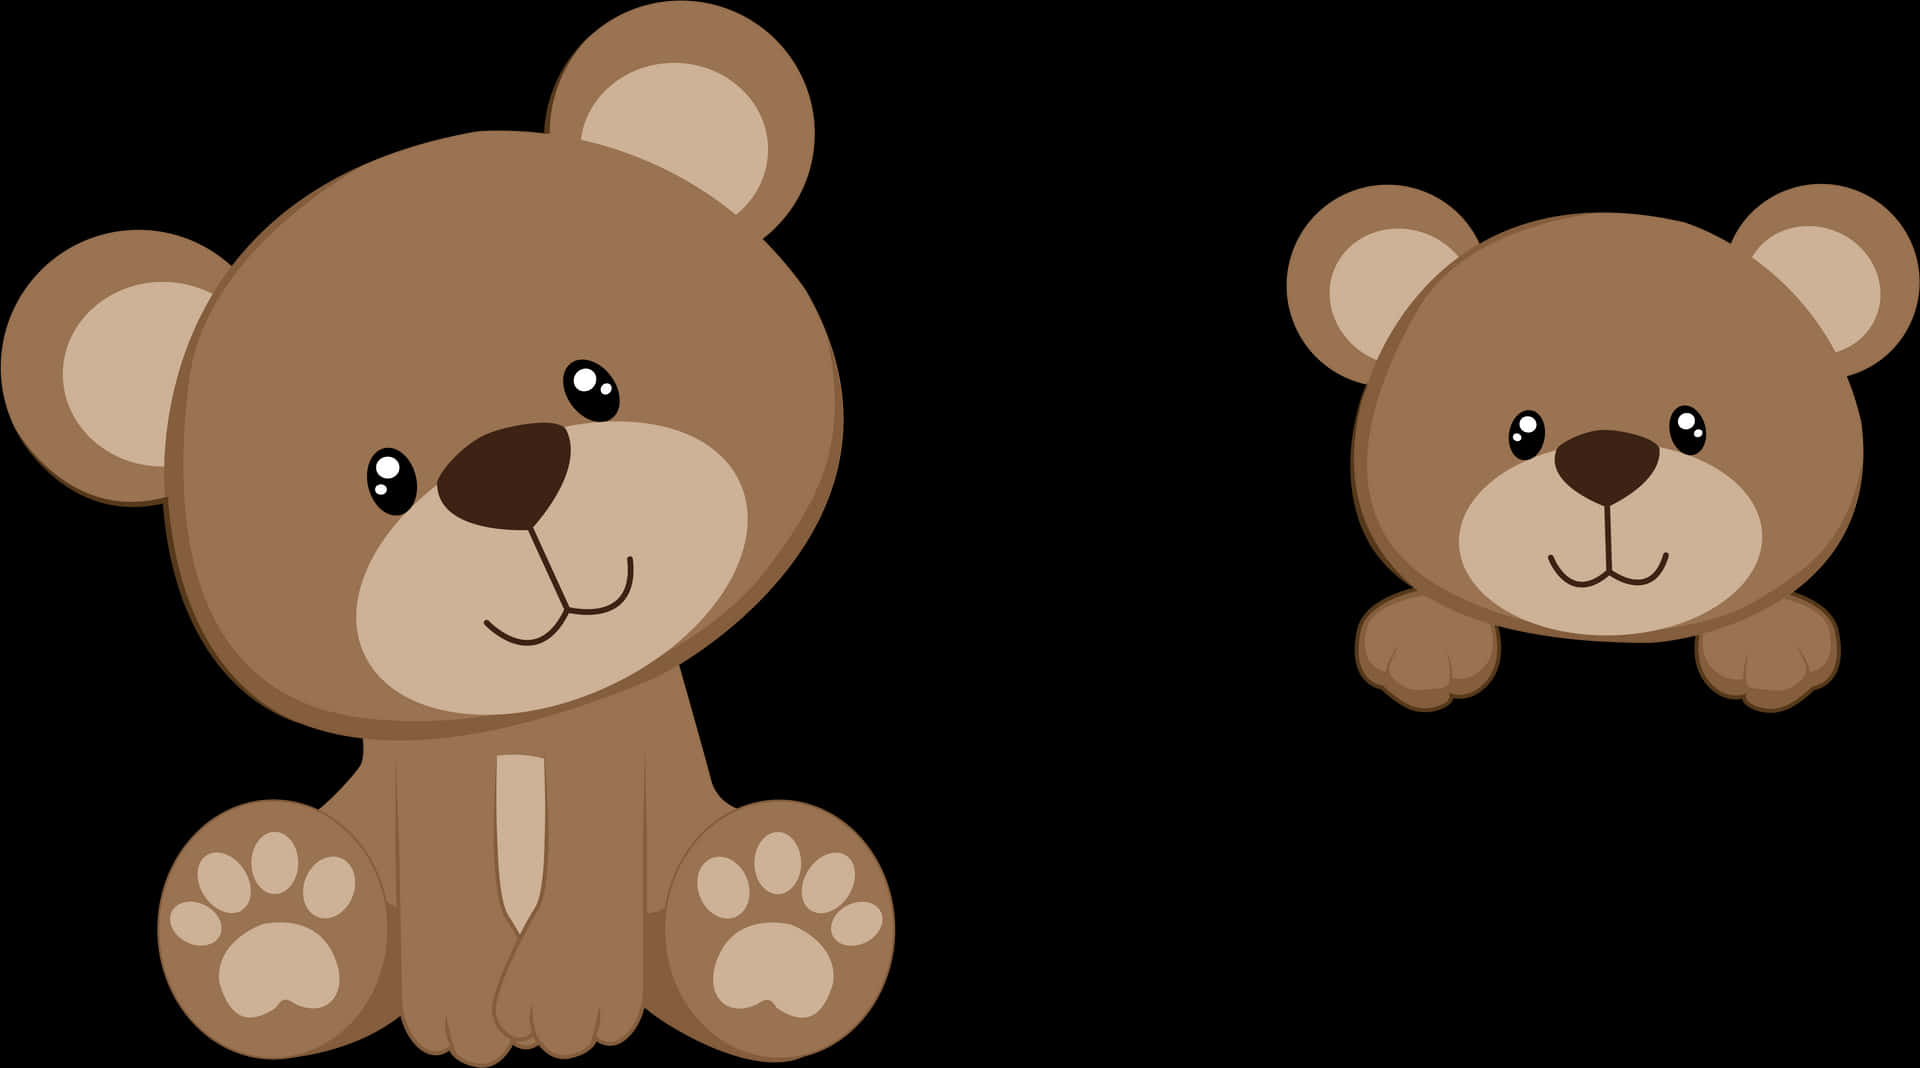 Cute Cartoon Teddy Bears PNG image